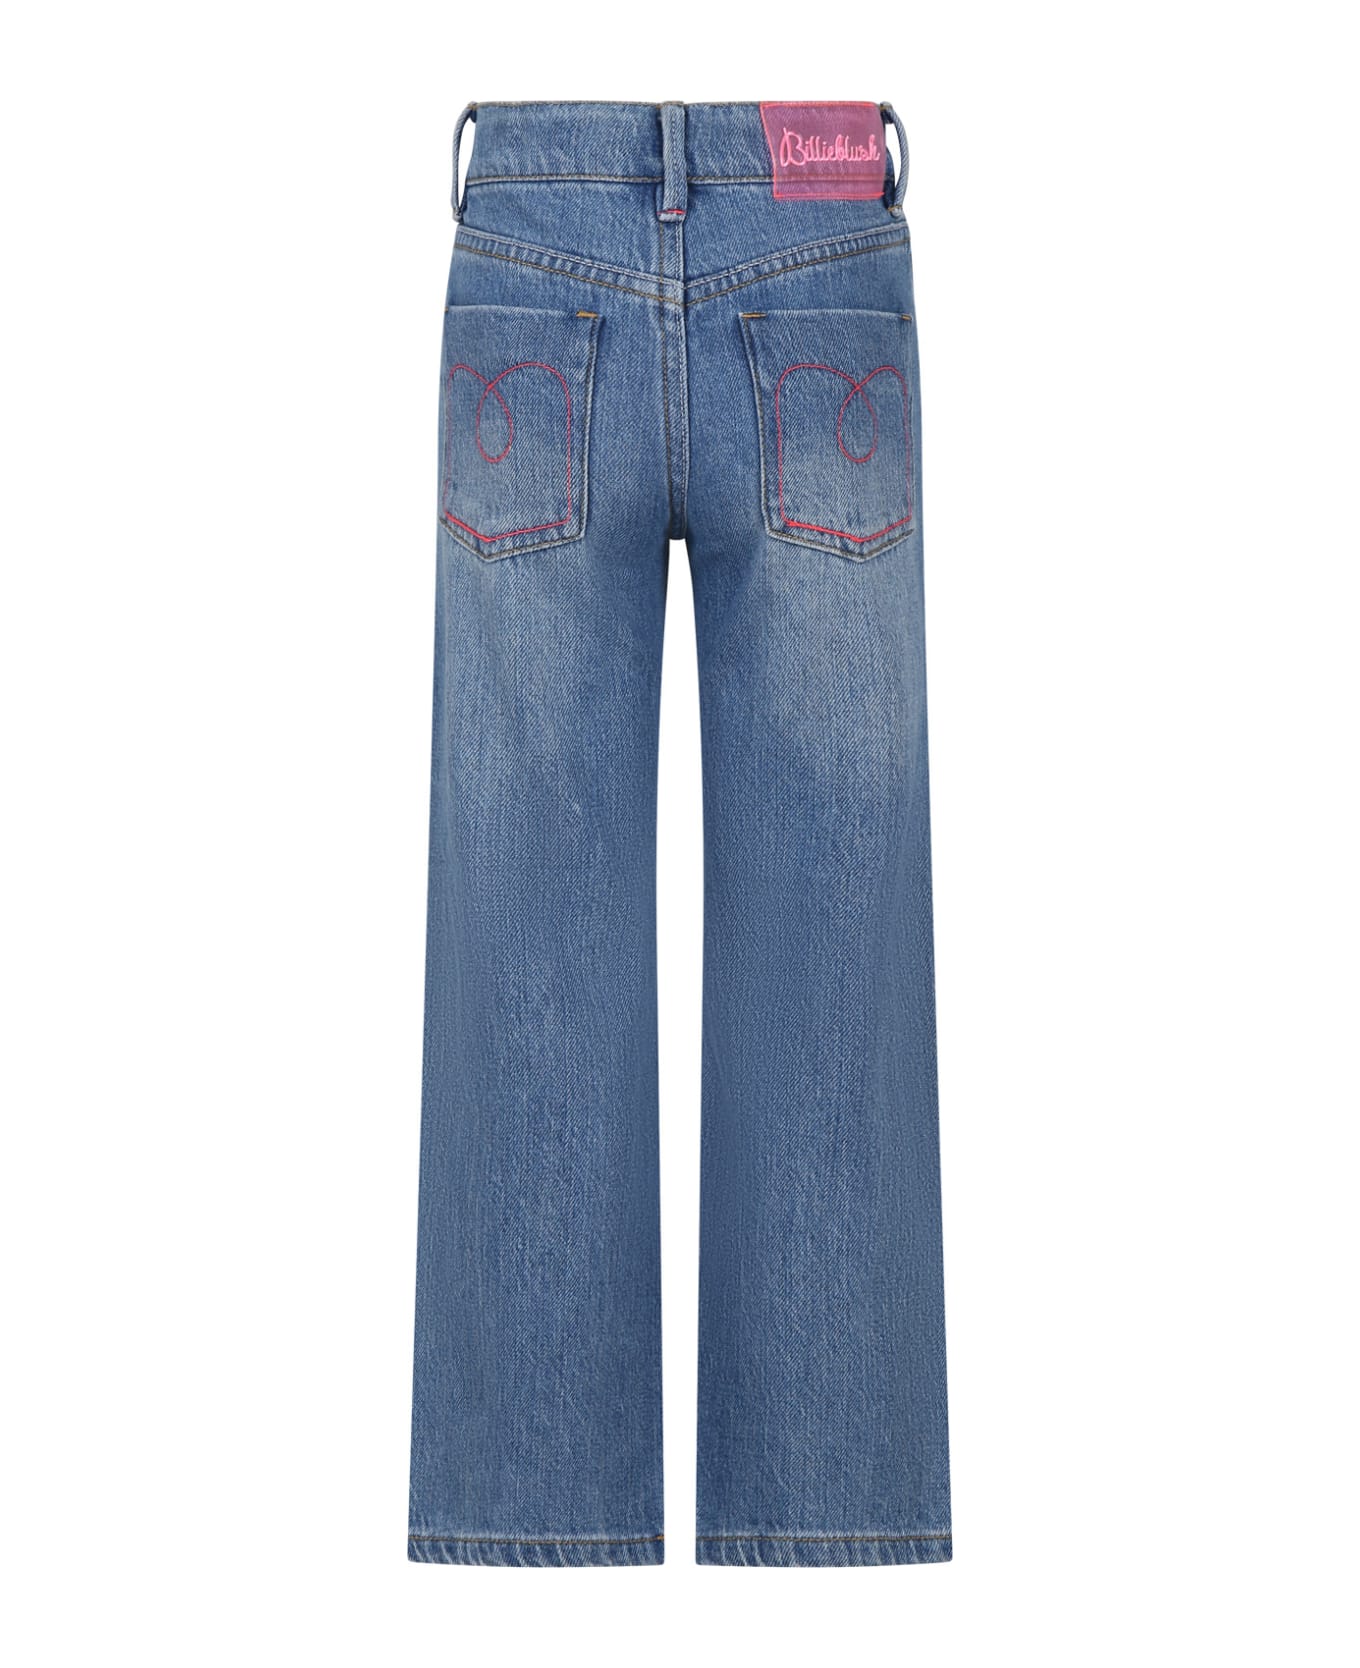 Billieblush Denim Jeans For Girls With Studs - Denim